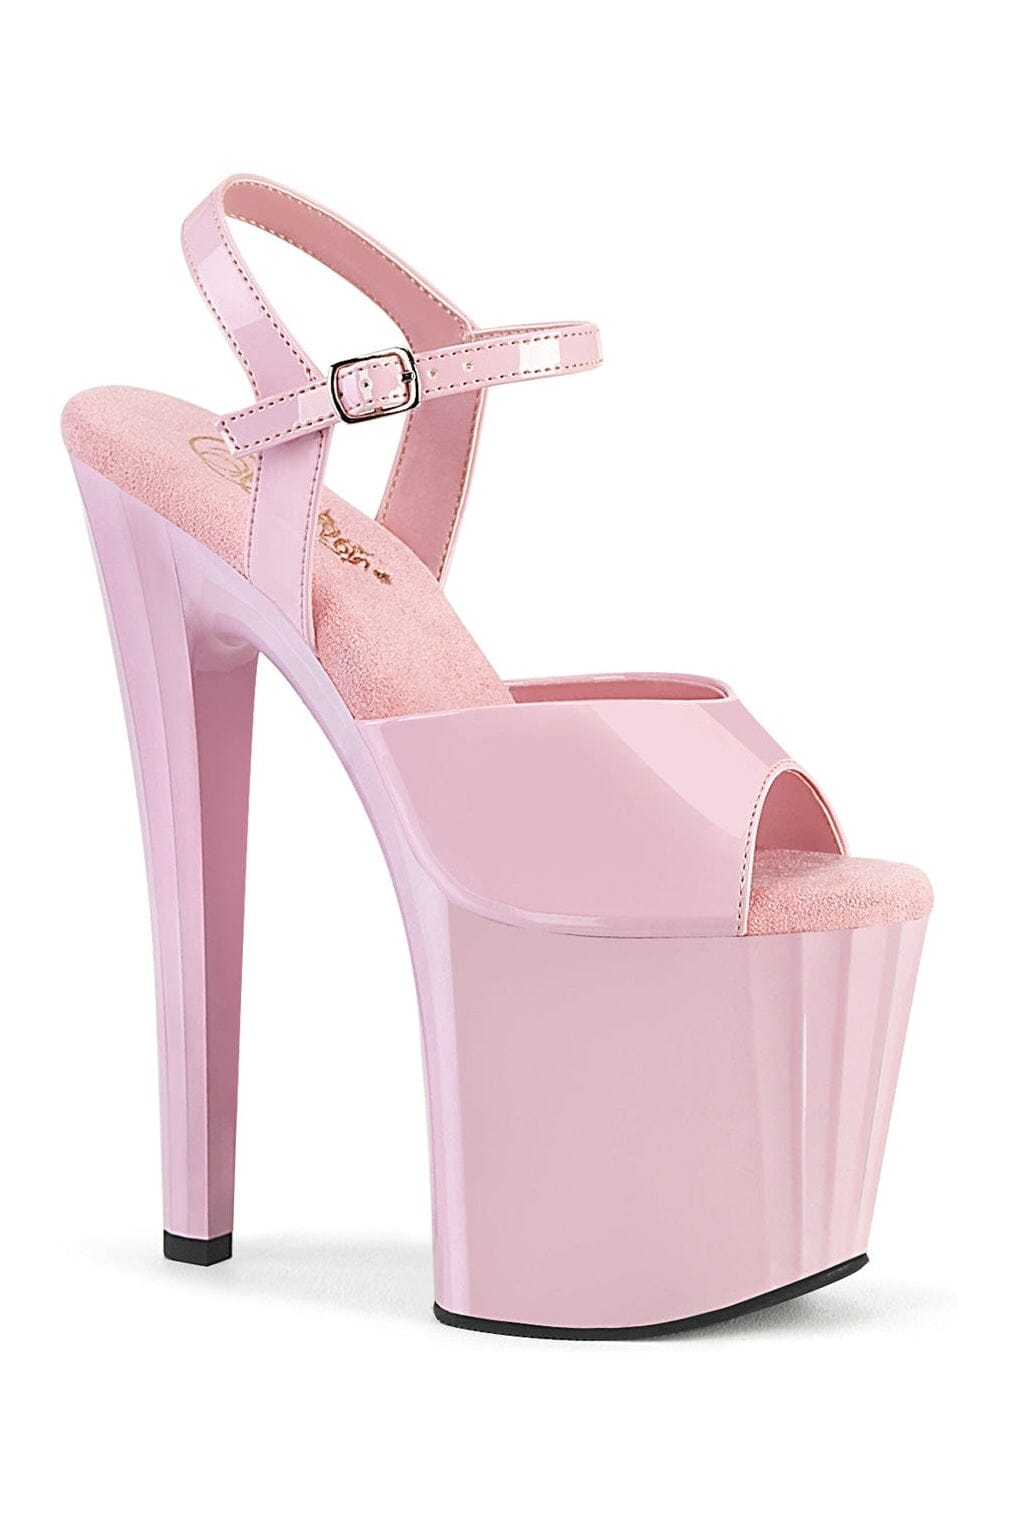 ENCHANT-709 Pink Patent Sandal-Sandals-Pleaser-Pink-10-Patent-SEXYSHOES.COM